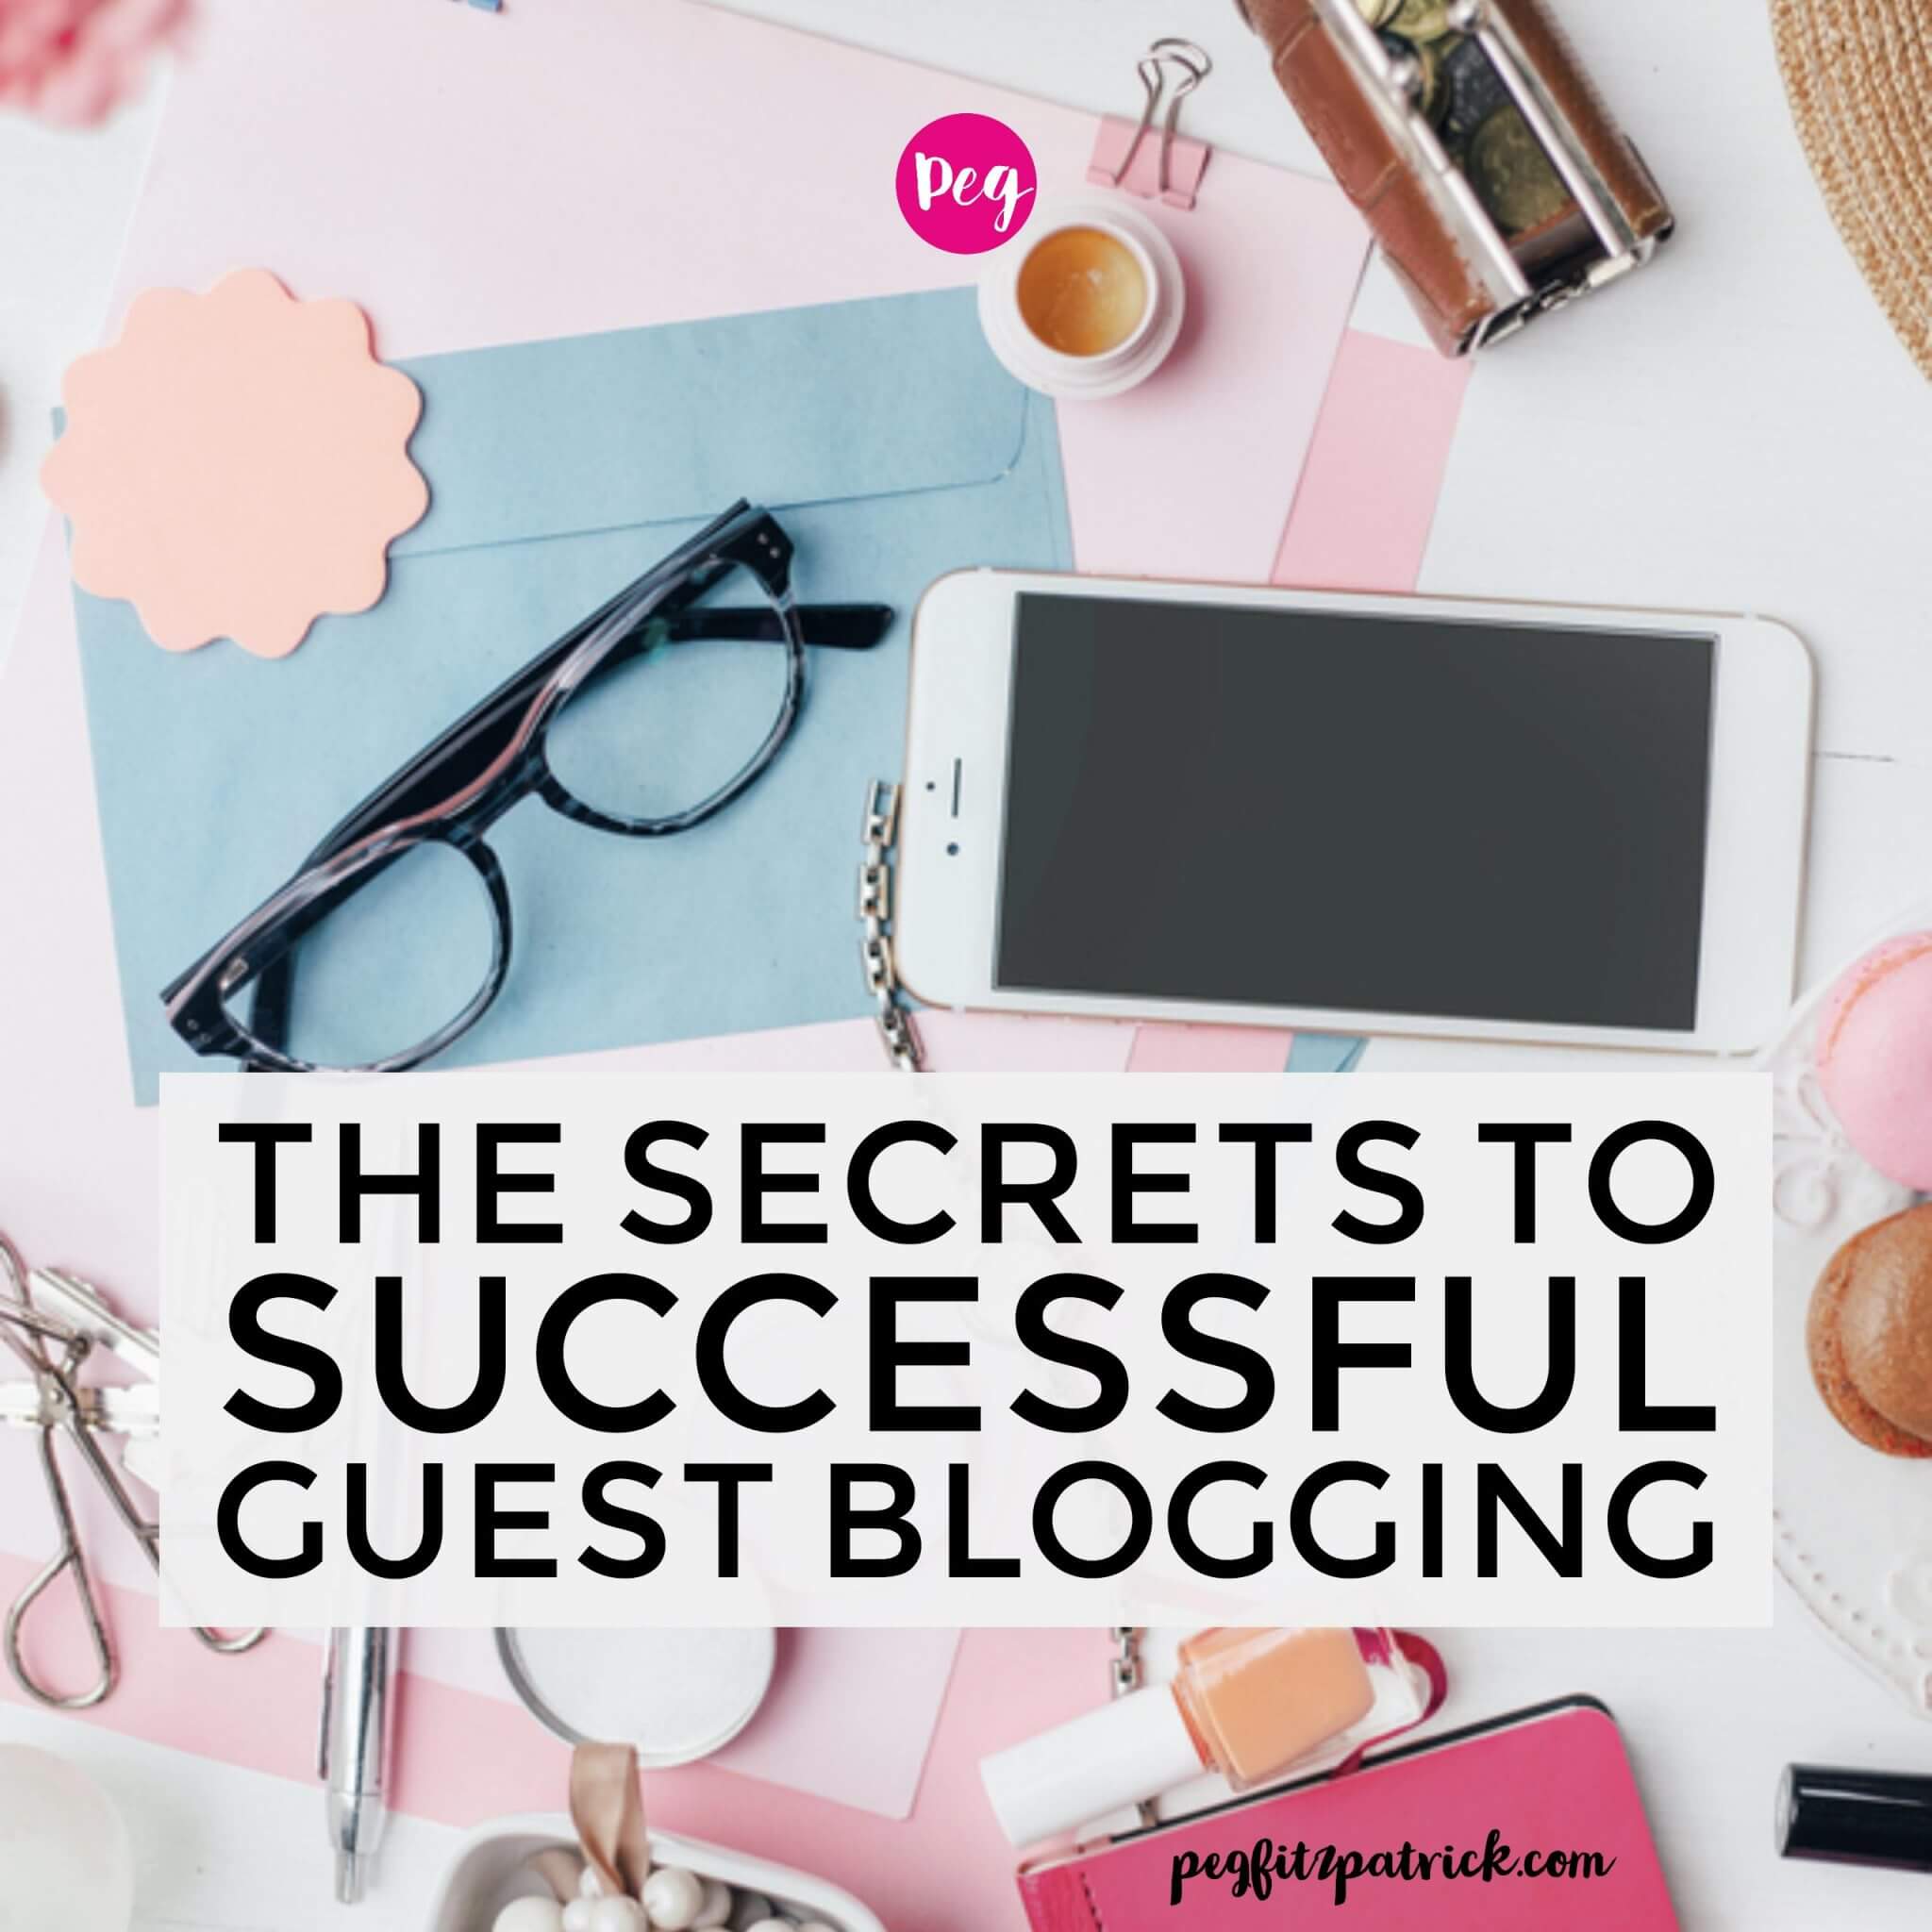 The Secrets to Successful Guest Blogging - https://pegfitzpatrick.com/